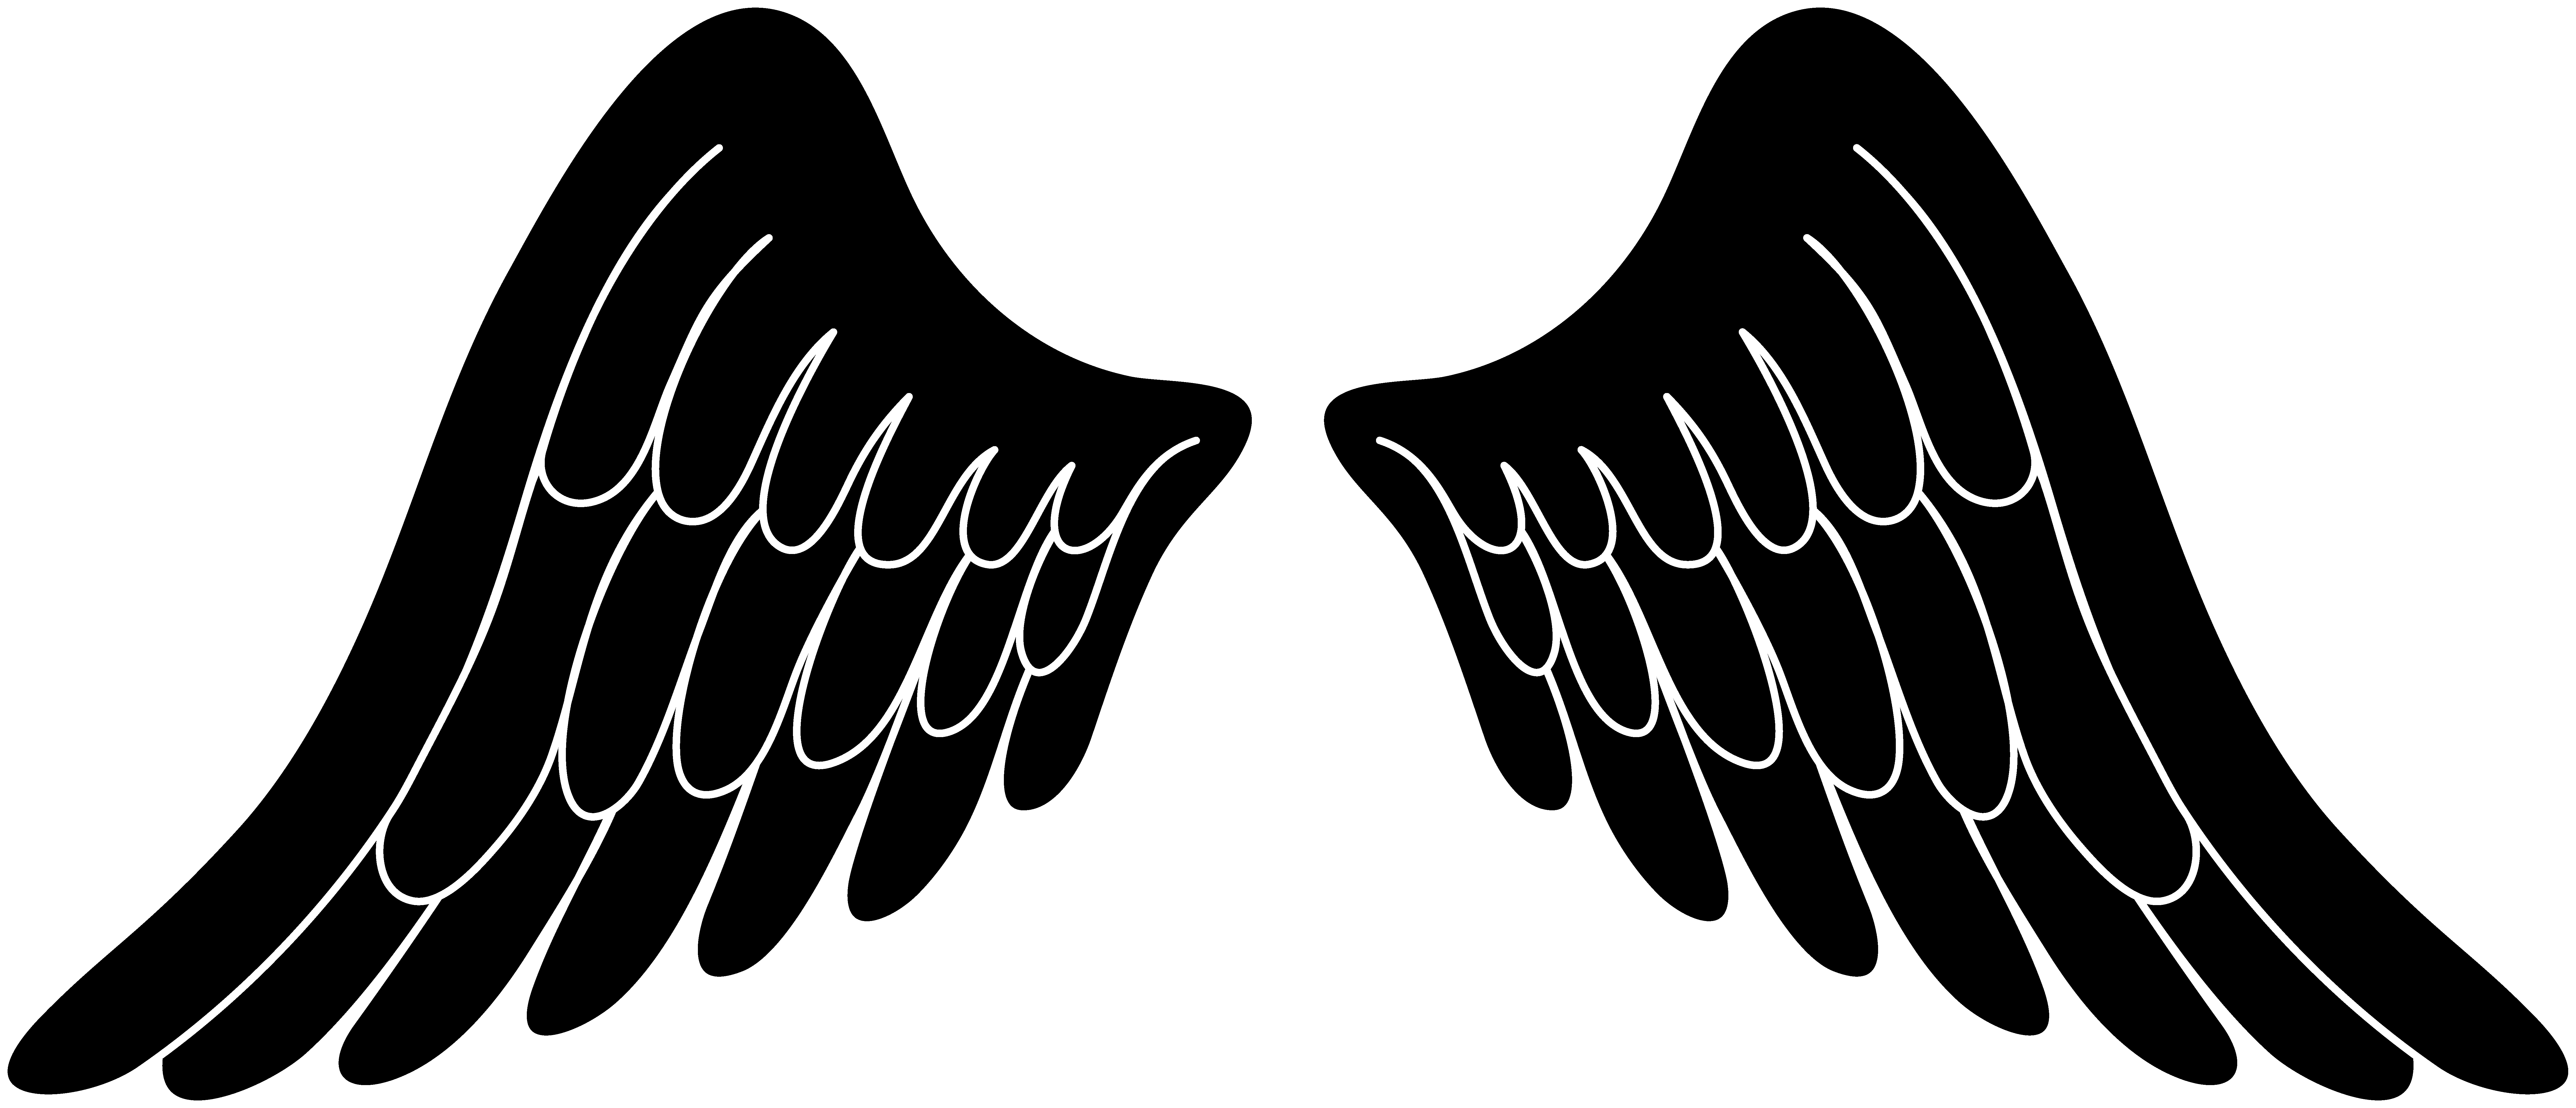 Angel wings clip art free vec